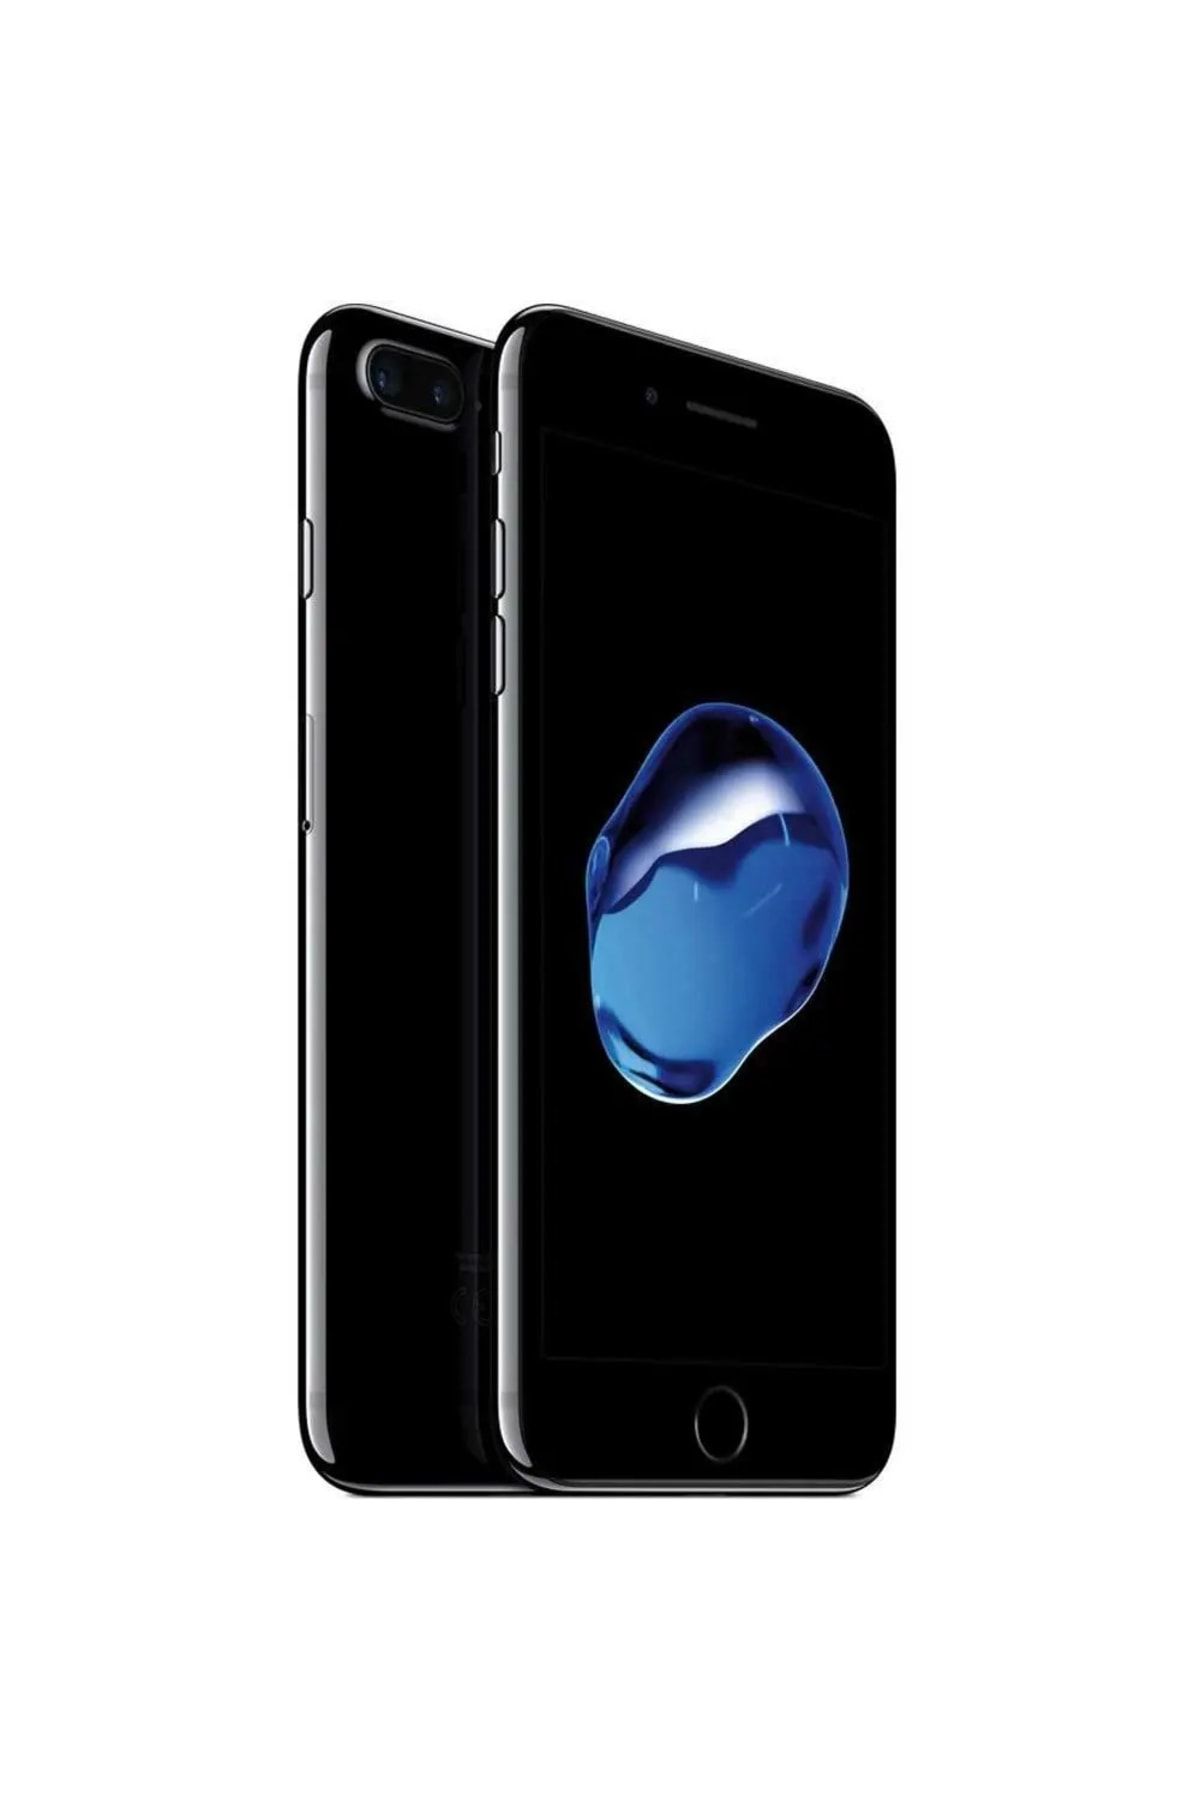 Apple Yenilenmiş iPhone 7 Plus 32 GB Black Cep Telefonu (12 Ay Garantili)